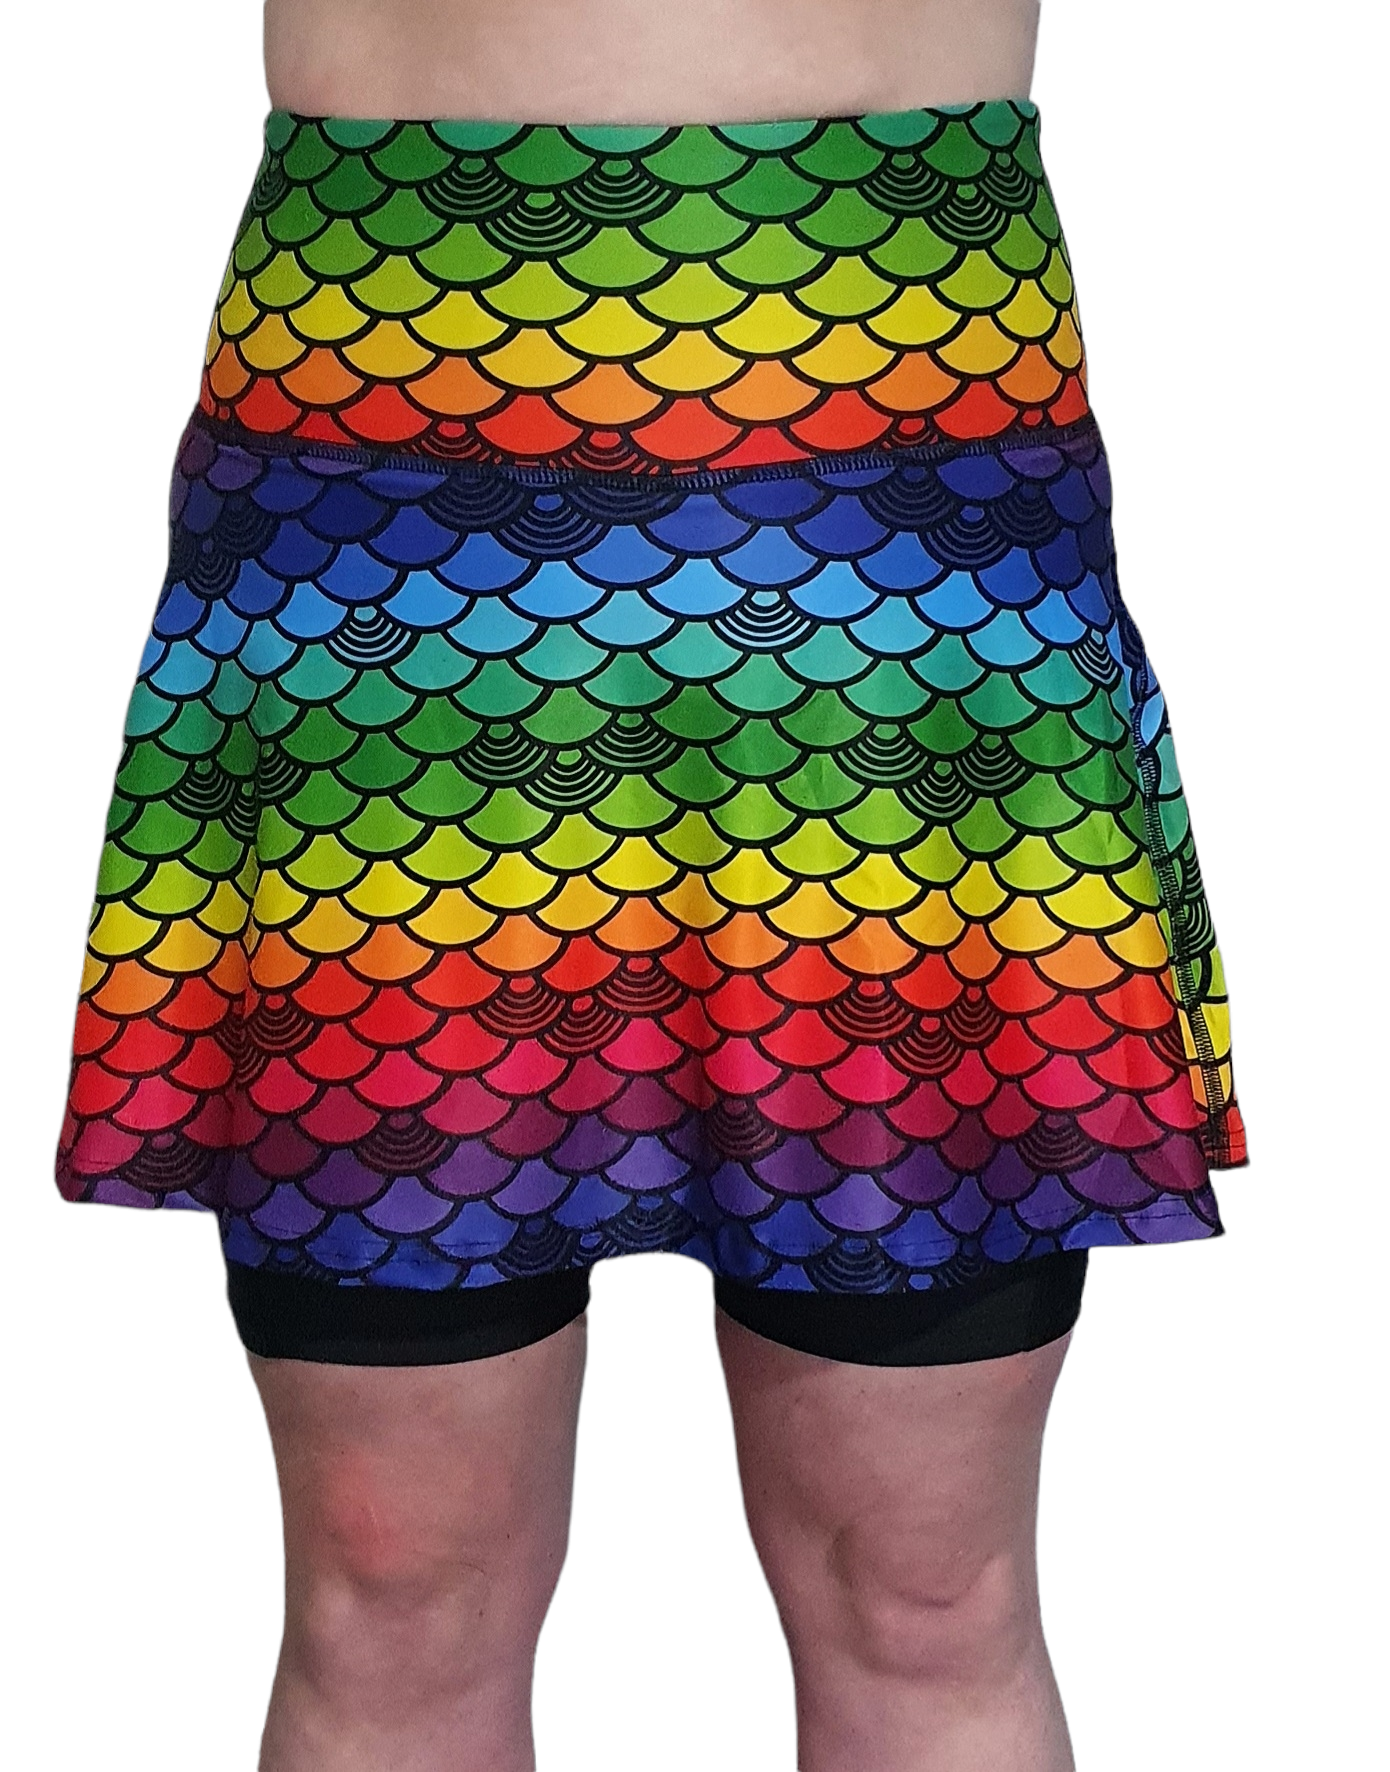 Funky Fit HI Activewear Skort - Rainbow Mermaid